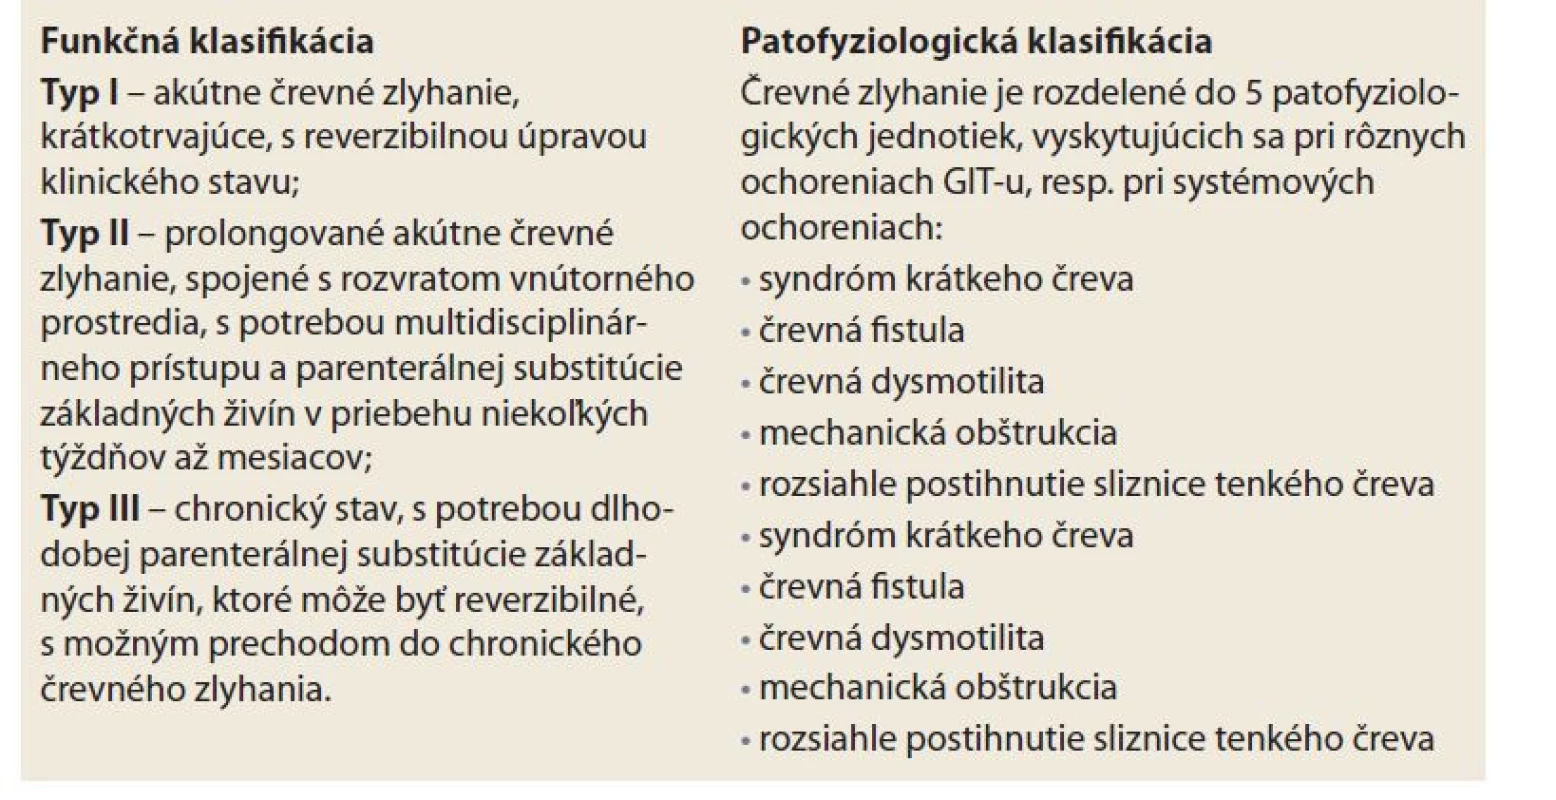 Indikačné kritériá a klasifikácia črevného zlyhania [17].<br>
Tab. 2. Indication criteria and classification of intestinal failure [17].